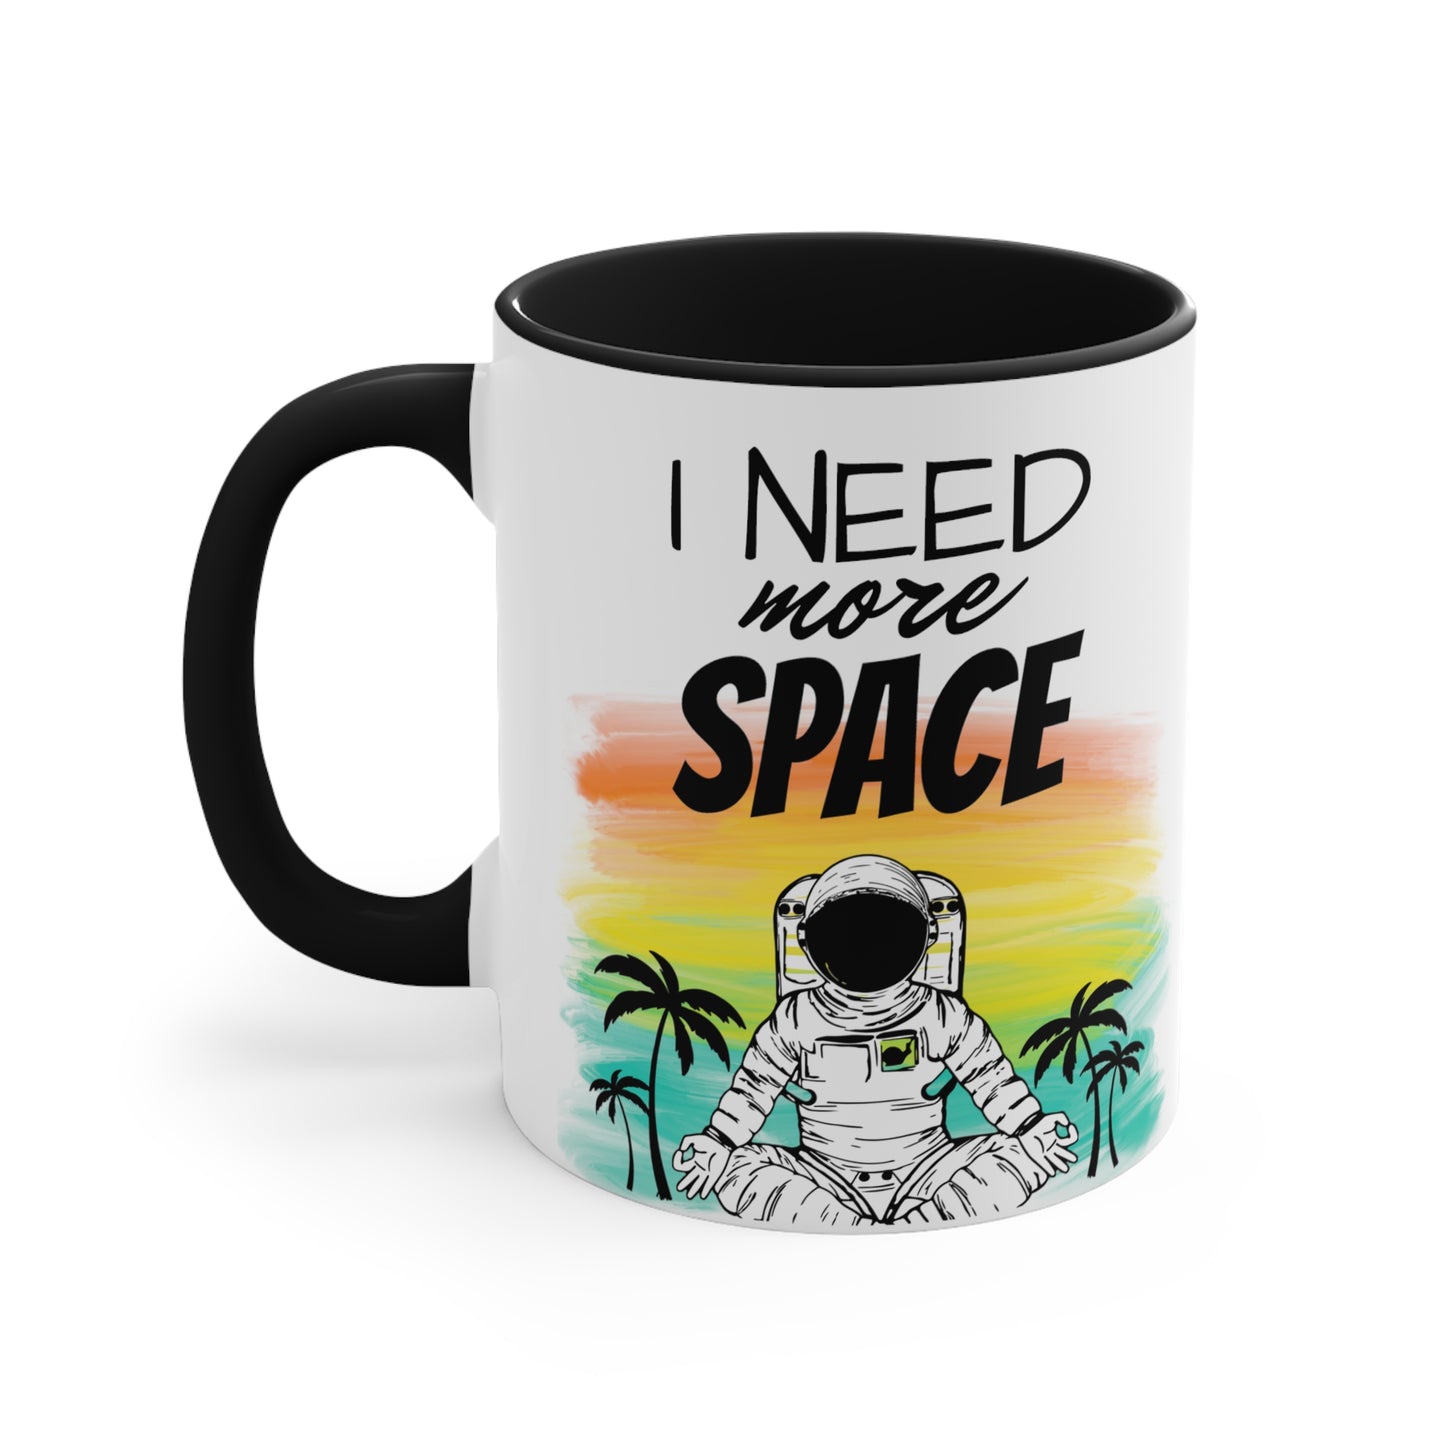 I Need Space - Astronaut Coffee Mug